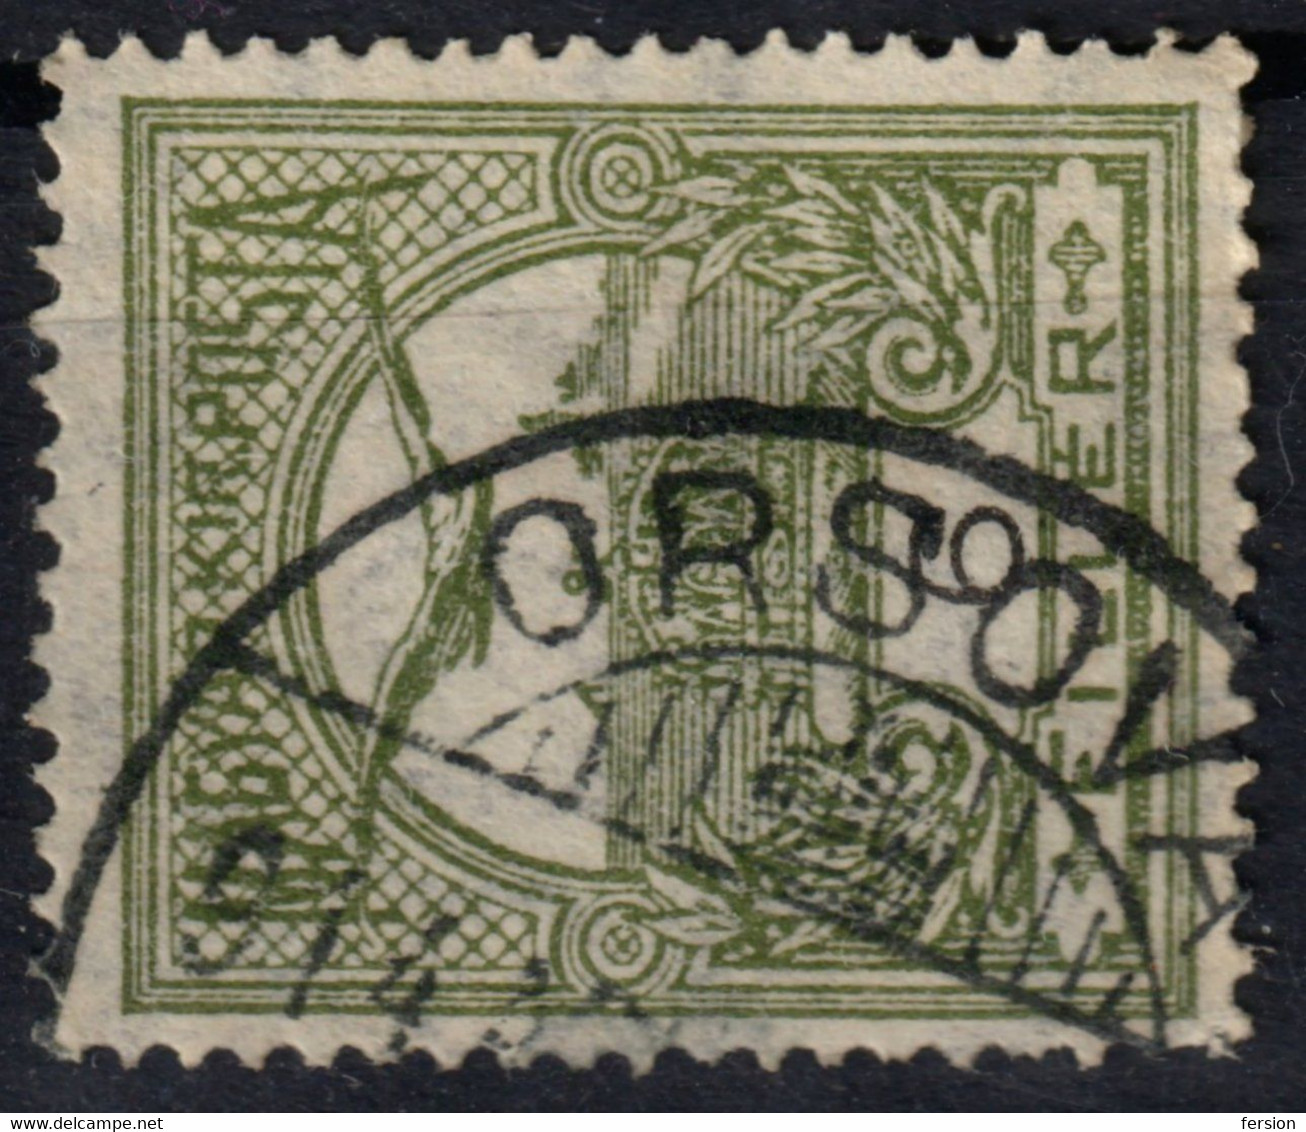 ORSOVA Orșova Postmark / TURUL Crown 1914 Hungary Romania Transylvania  Krassó Szörény County KuK - 6 Fill - Transilvania